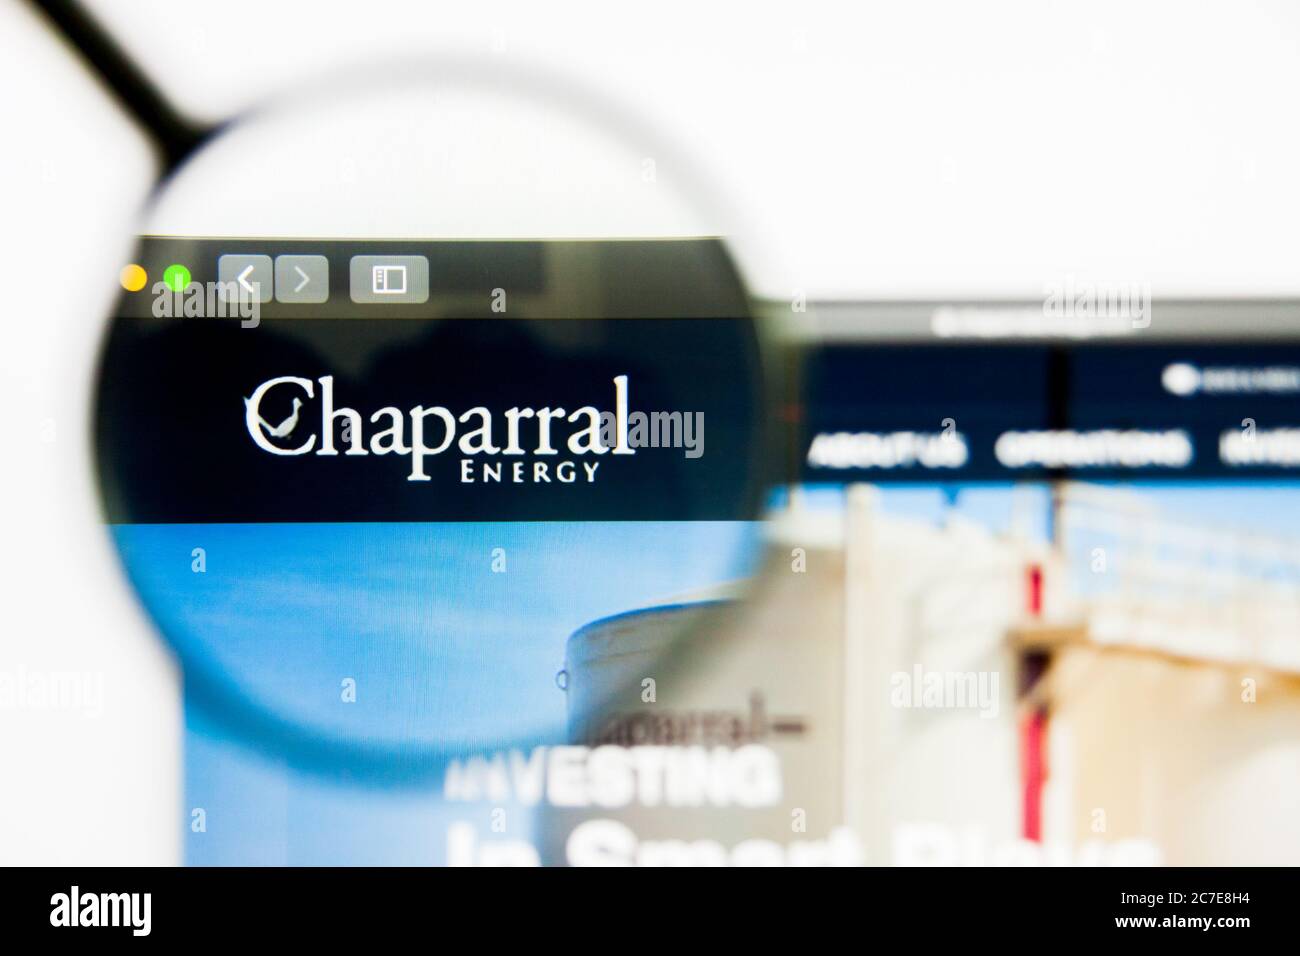 Los Angeles, California, USA - 25 Marzo 2019: Editoriale illustrativo della homepage del sito web Chaparral Energy. Logo Chaparral Energy visibile sul display Foto Stock